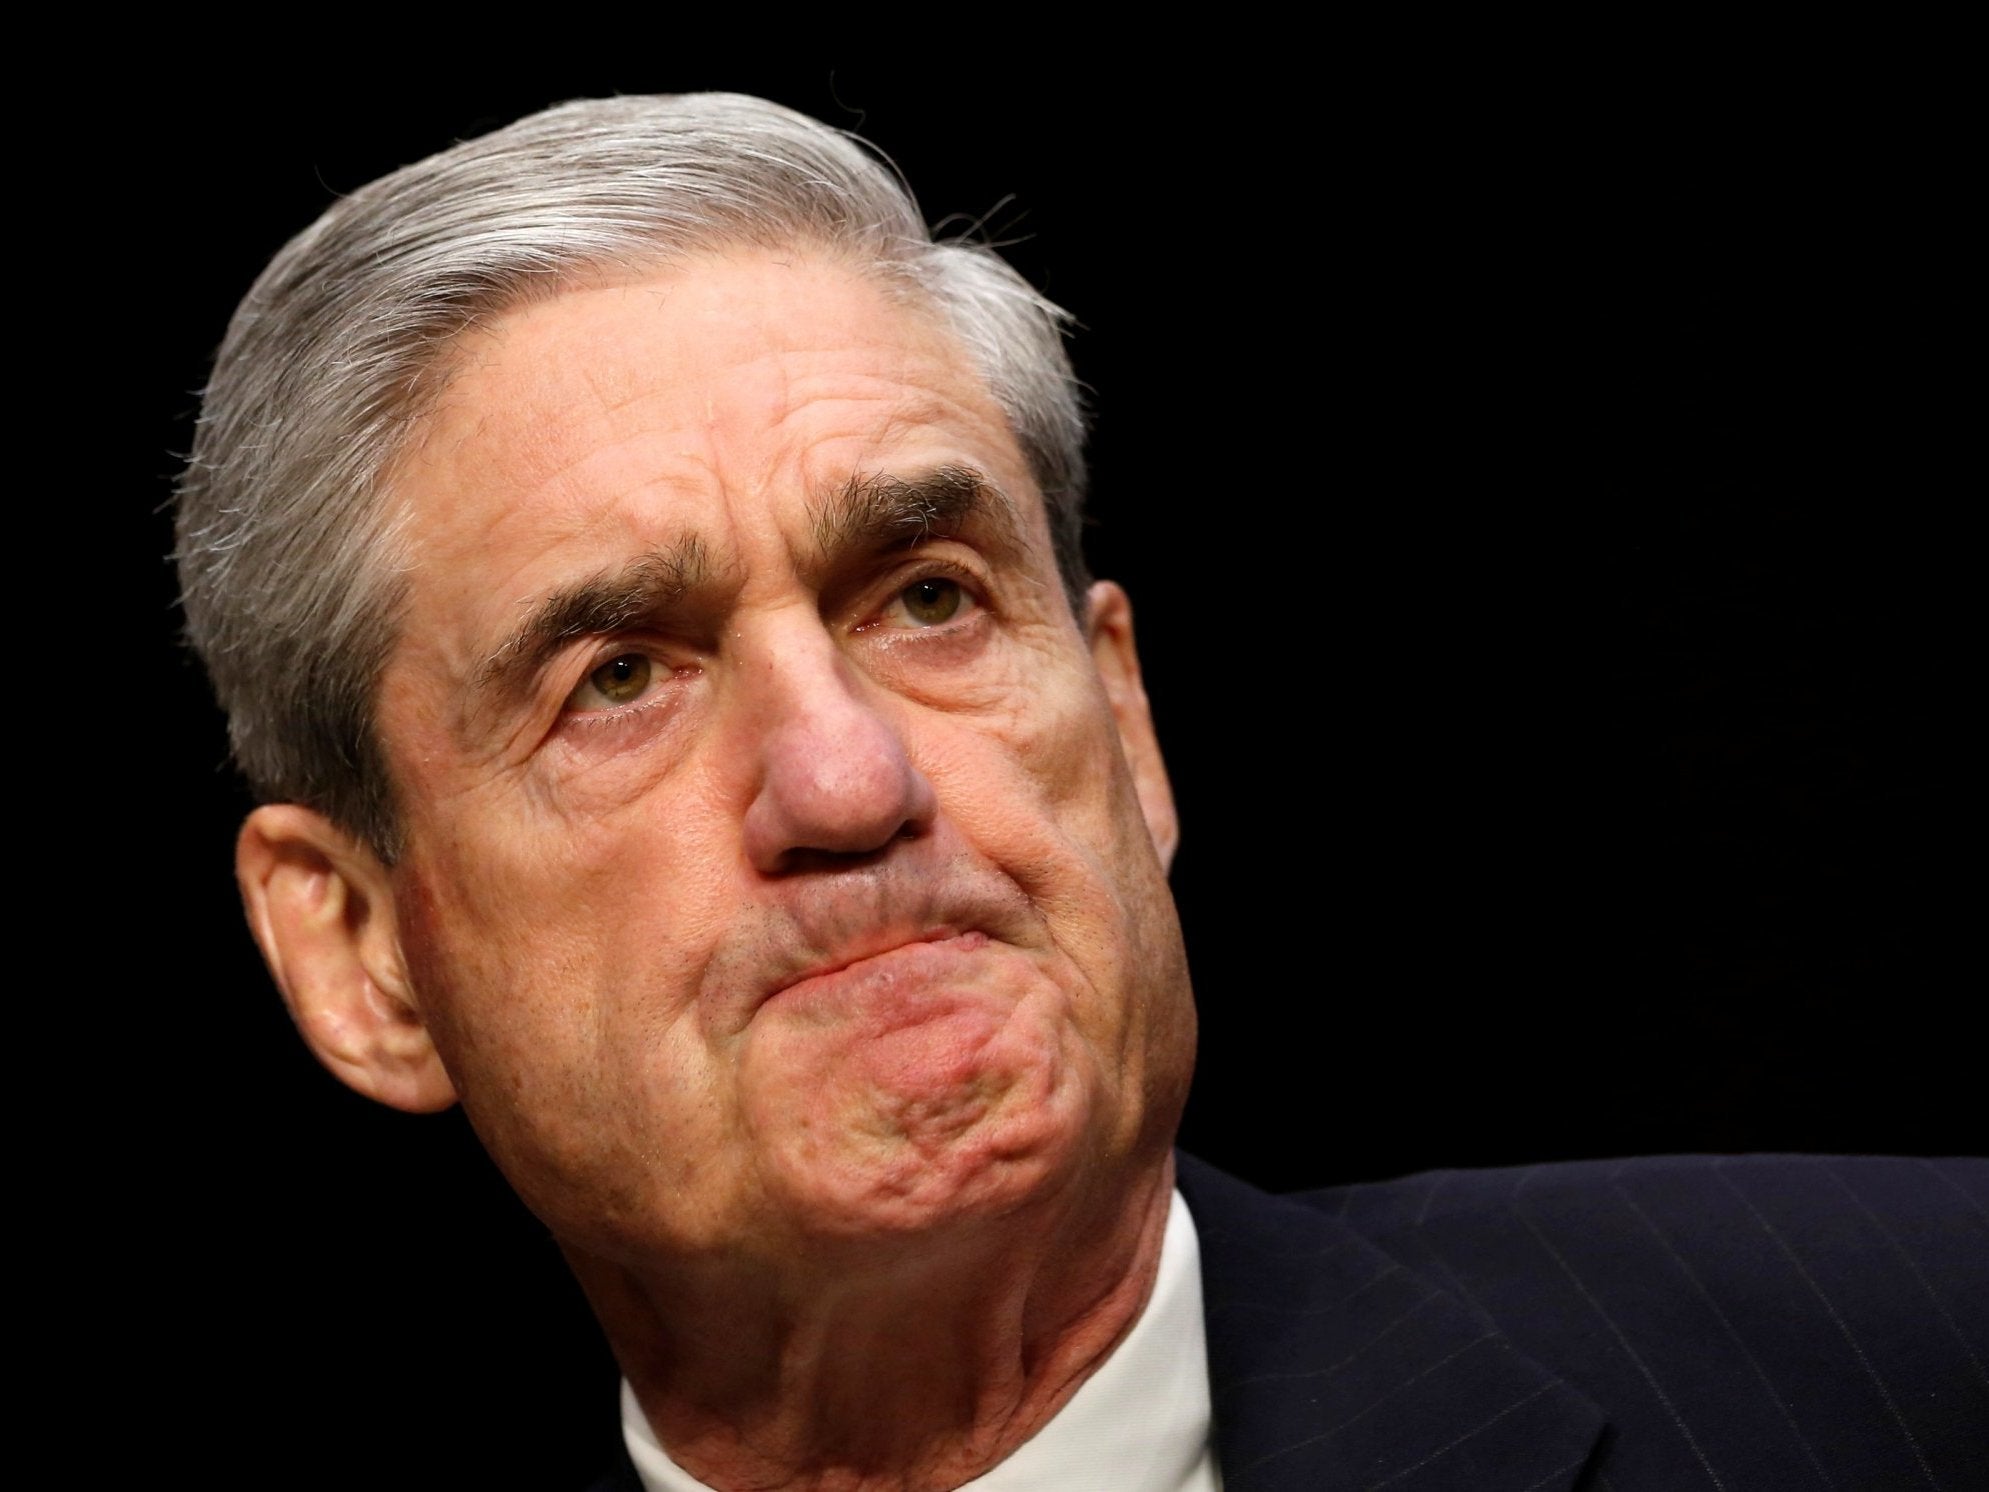 Trump's attorney general gave 'mischaracterisation' of Mueller report, Watergate prosecutor says